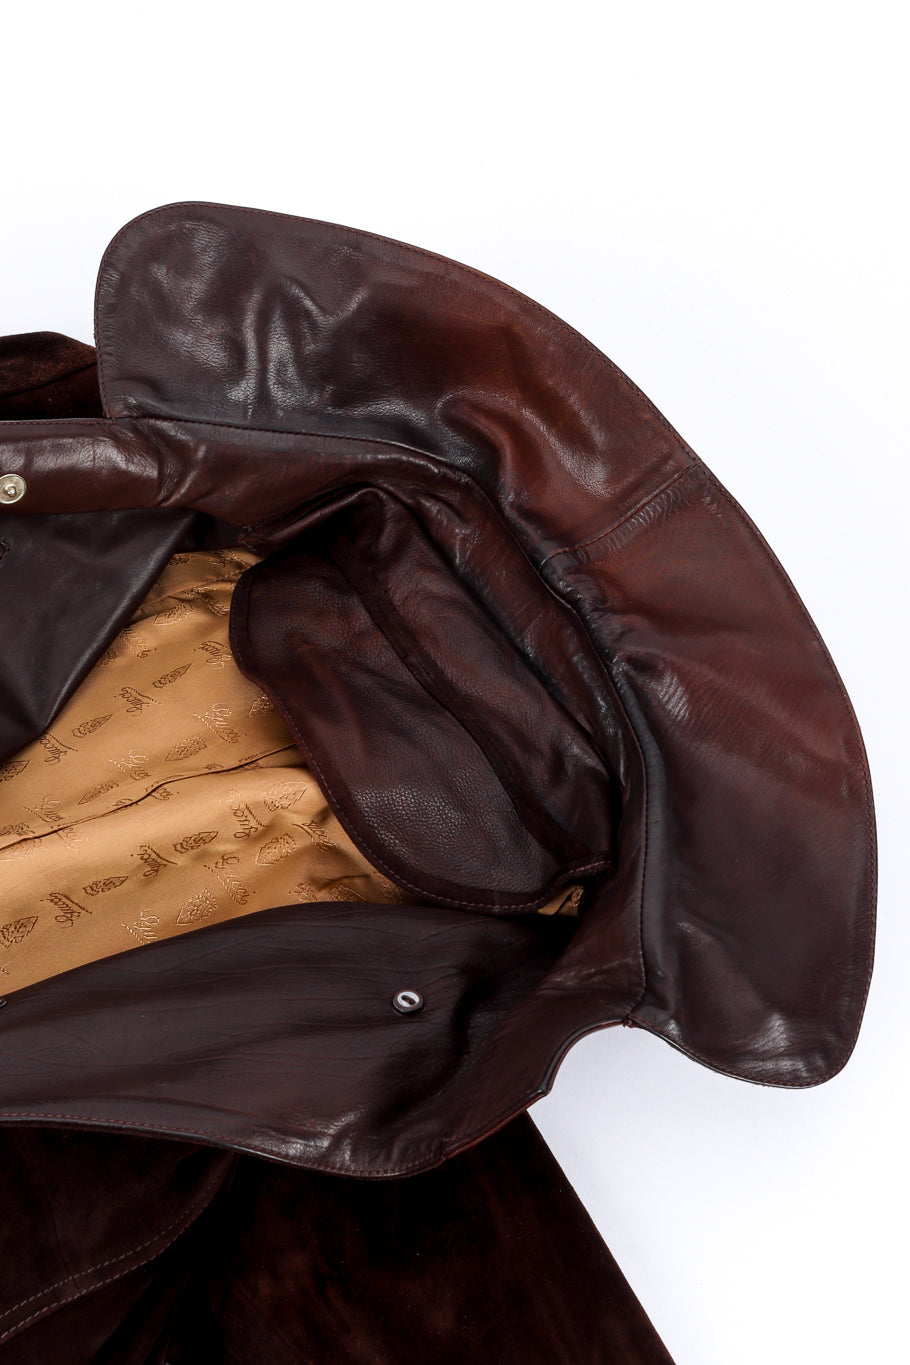 Vintage Gucci Suede and Leather Coat collar @recessla